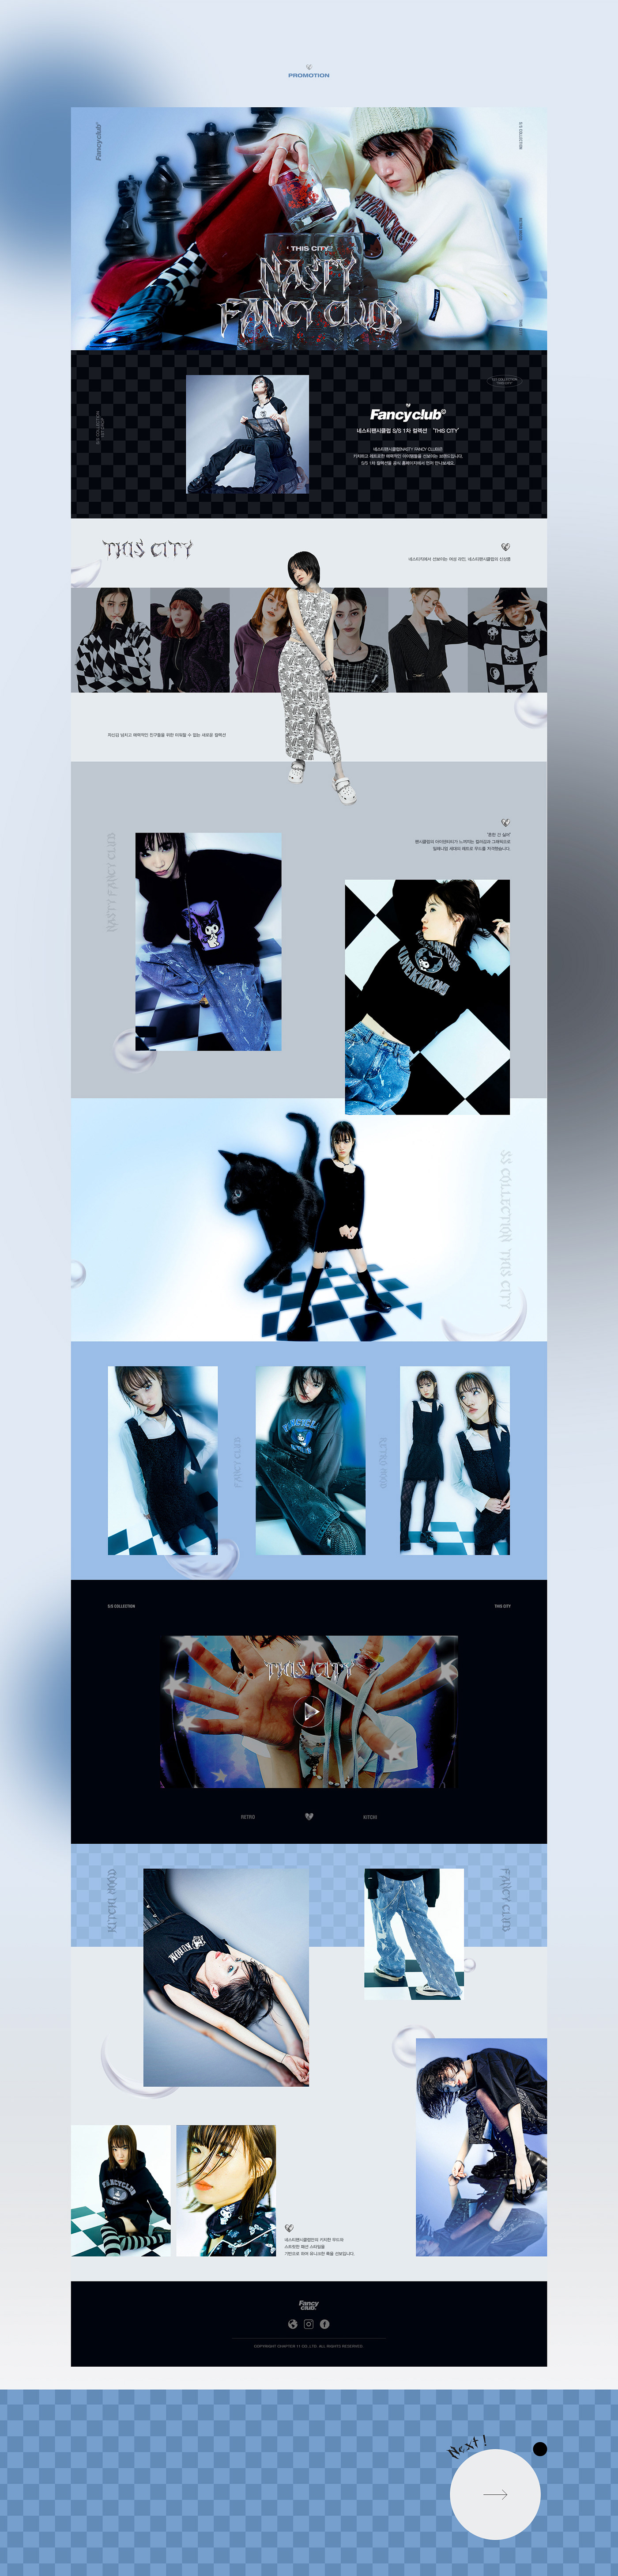 design Fashion  portfolio Promotion Design uiux Website 네스티팬시클럽 디자인  포트폴리오 프로모션